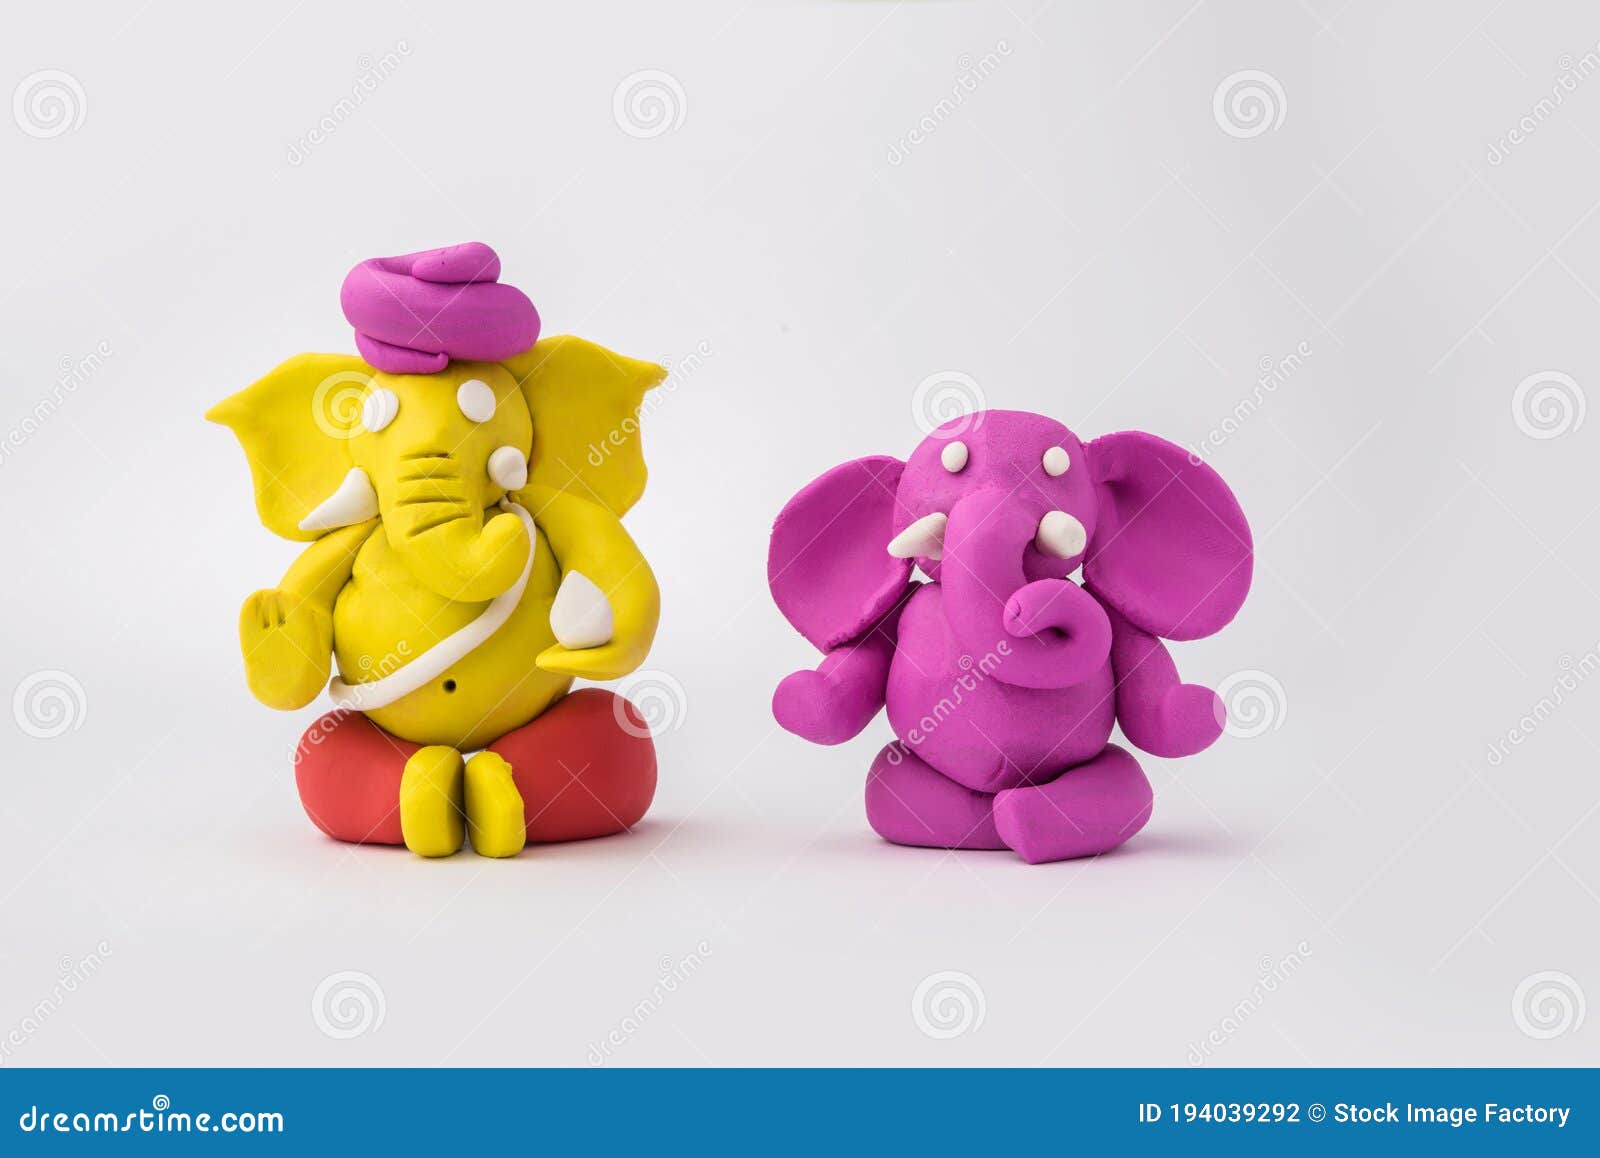 Multicolor Ganesha on wood sitting state/ idol (Small)